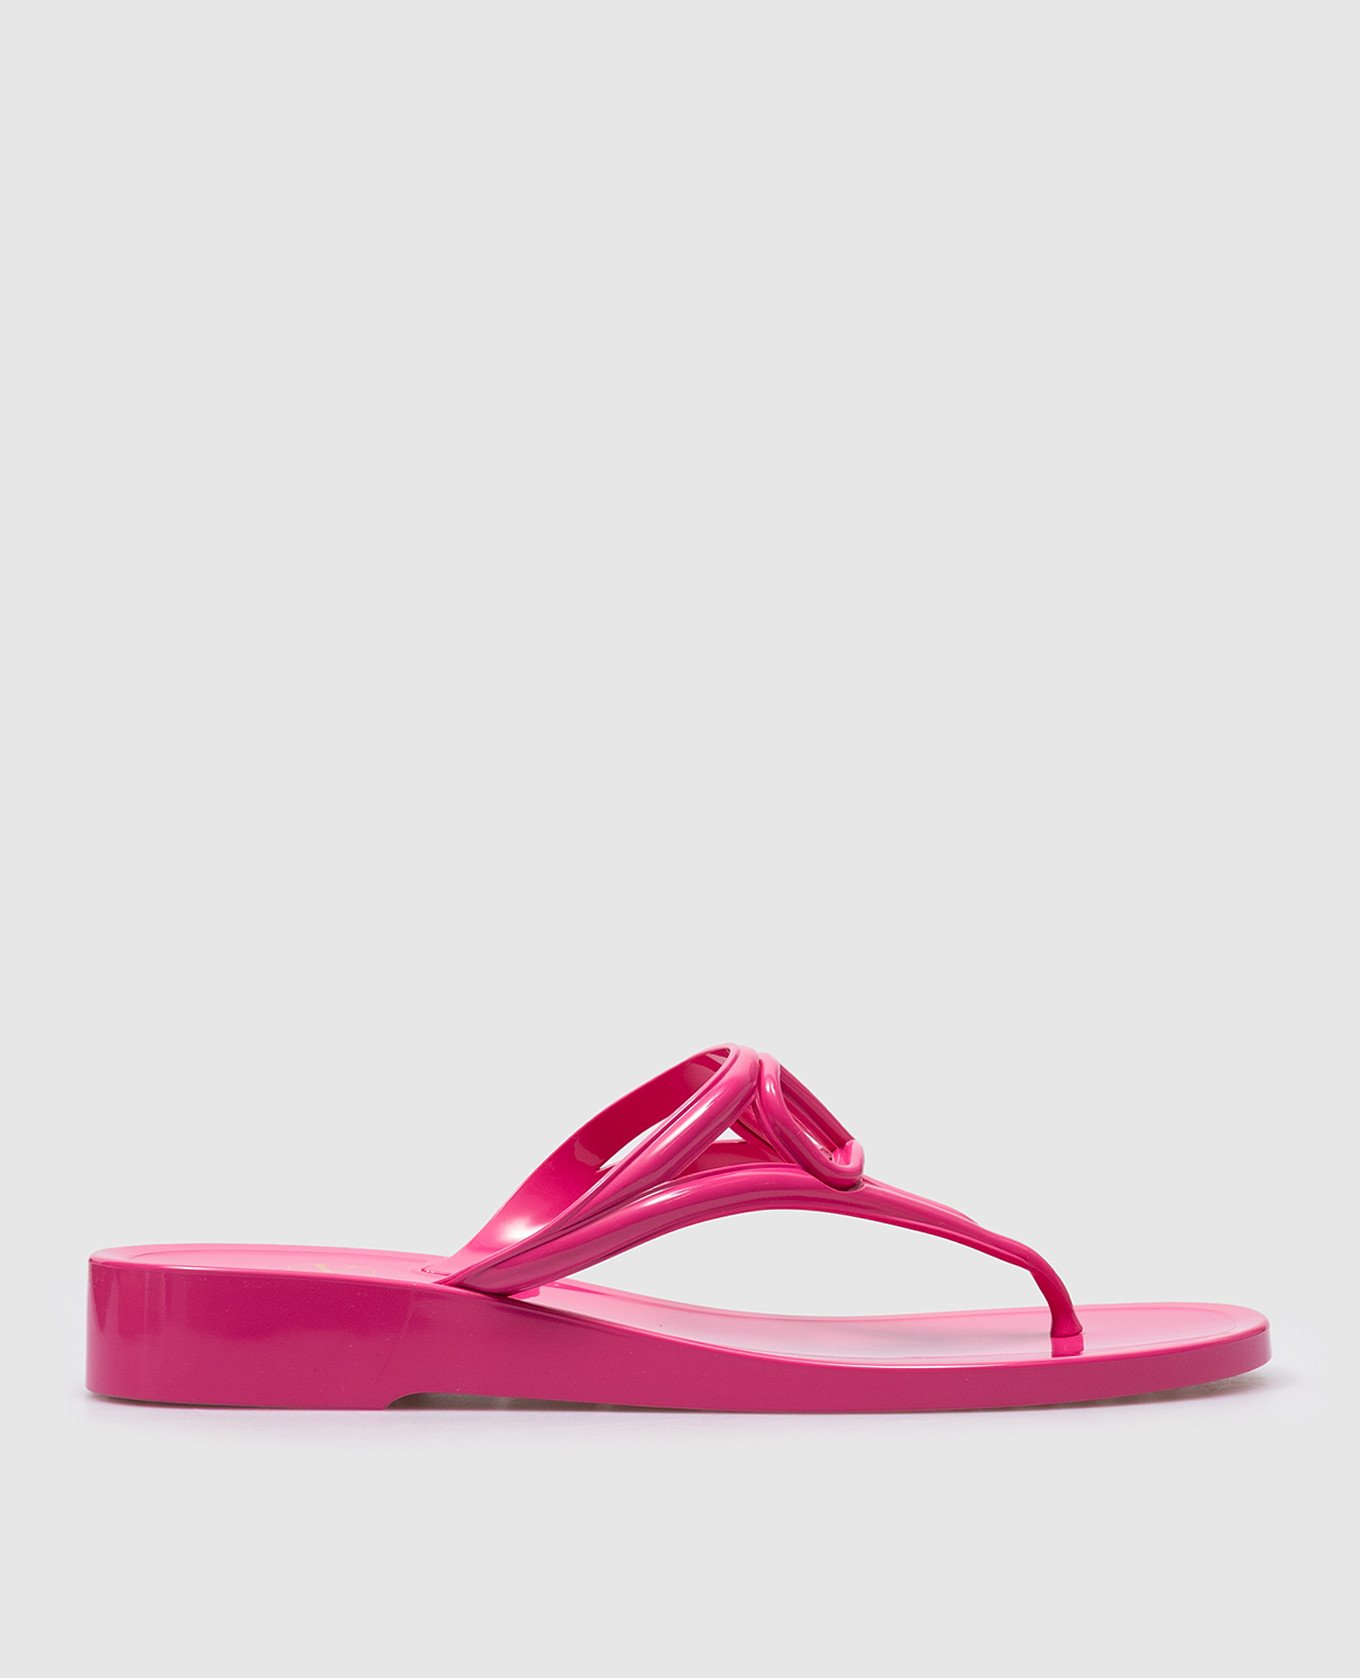 VLogo Signature flip flops in pink